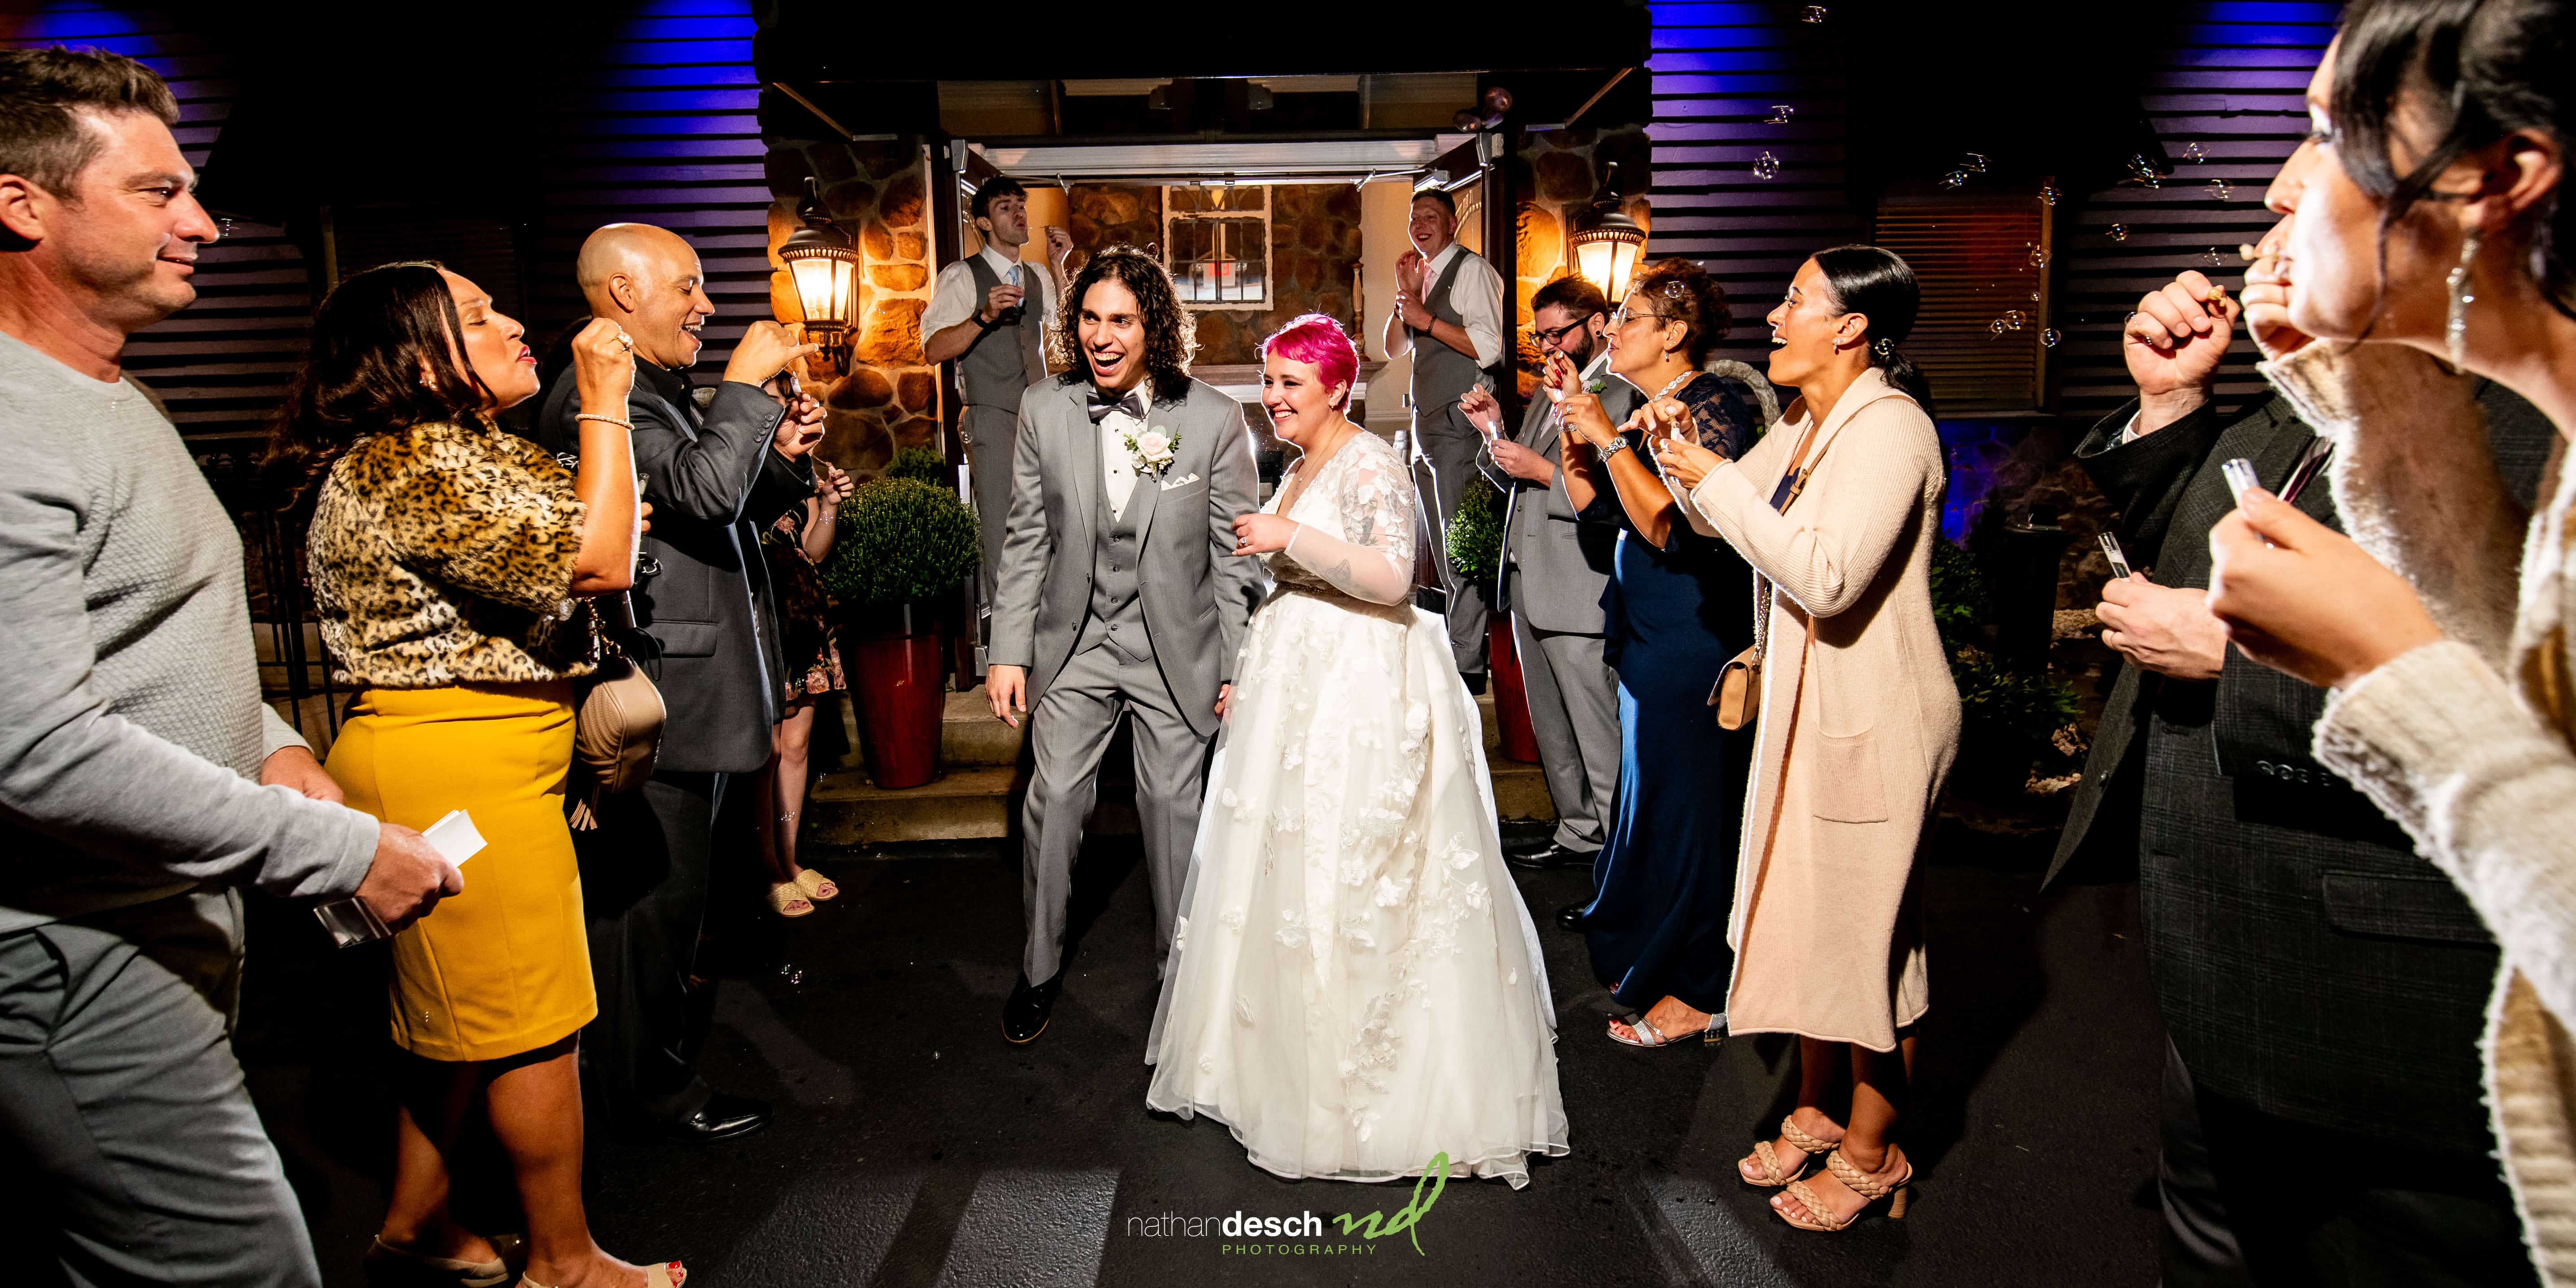 Bubble exit at wedding